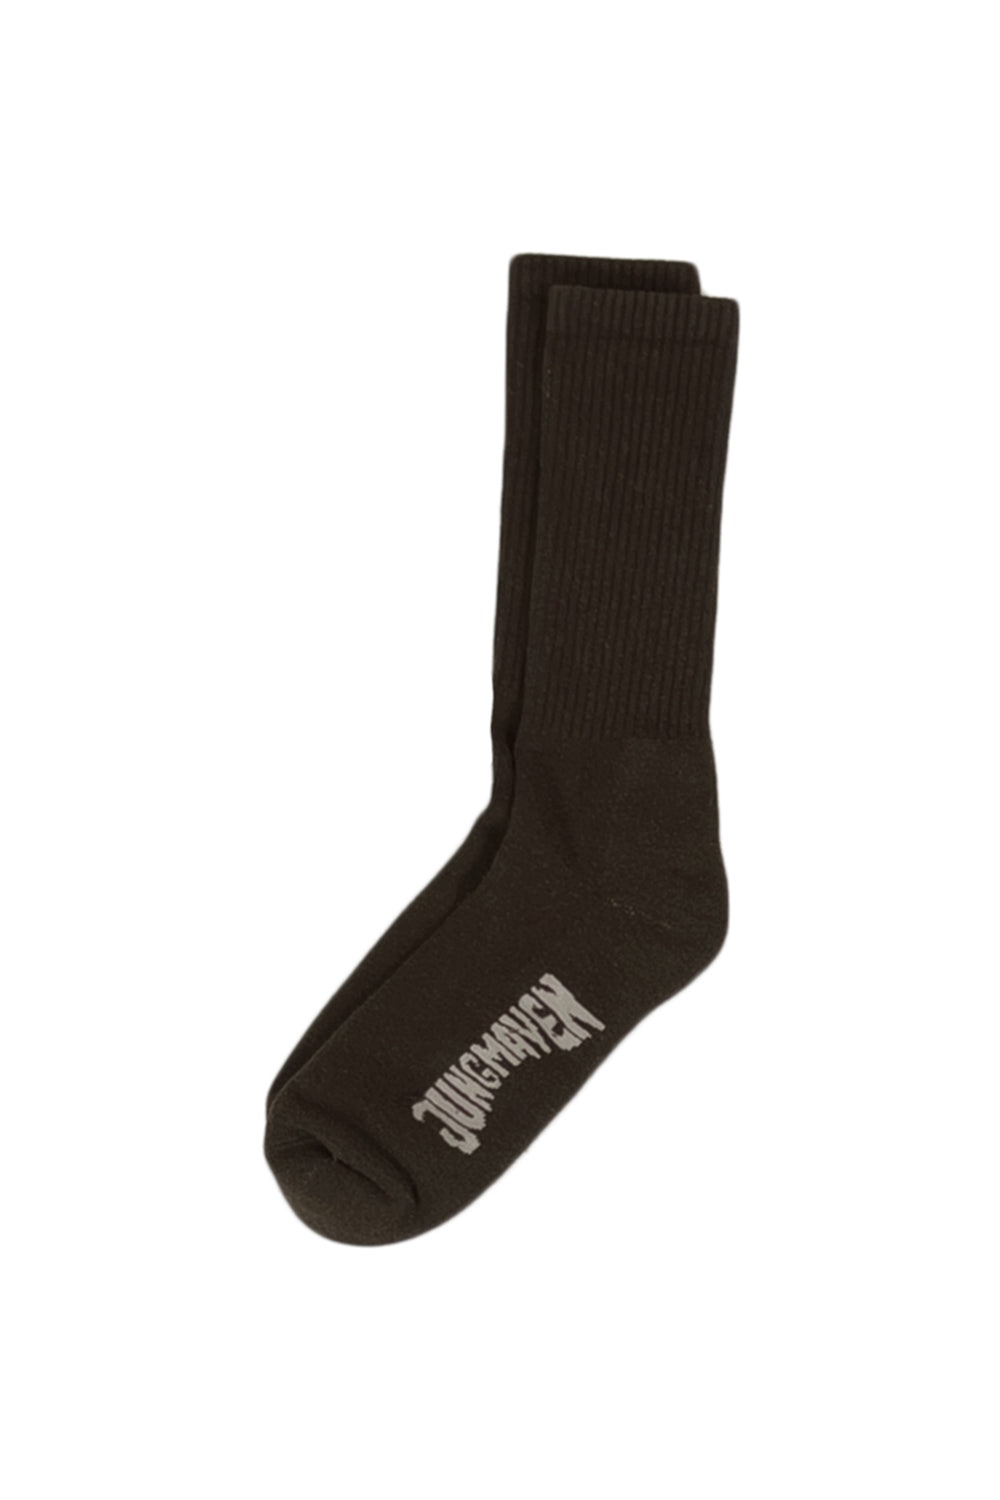 Hemp Crew Socks | Jungmaven Hemp Clothing & Accessories / Color: Espresso Brown